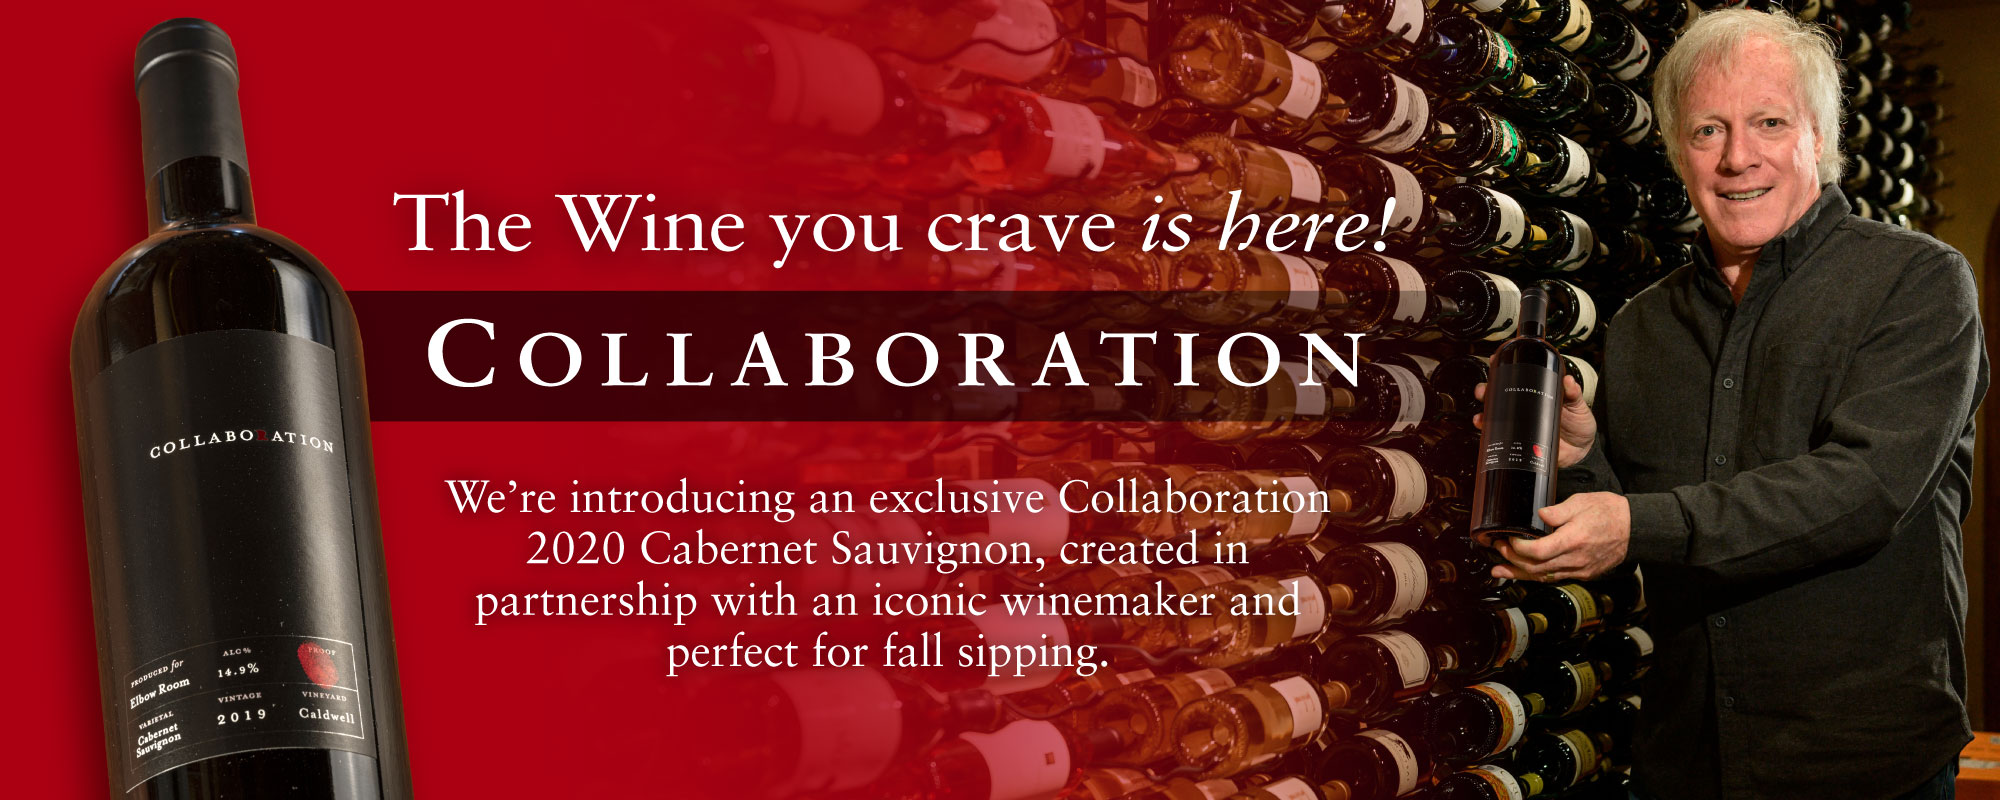 elbow room collaboration wine